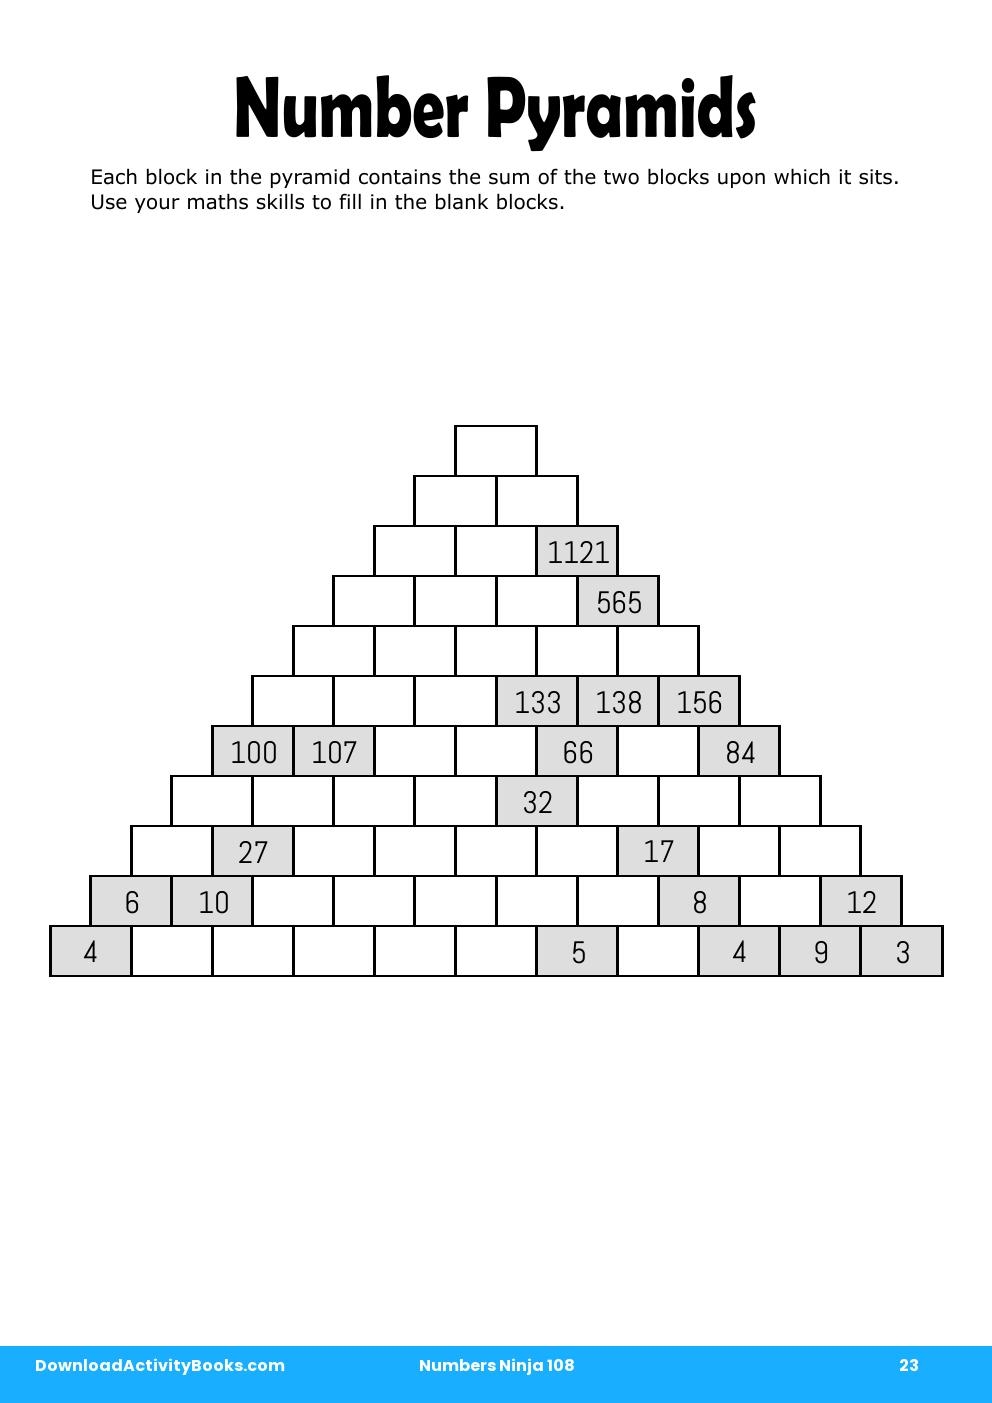 Number Pyramids in Numbers Ninja 108